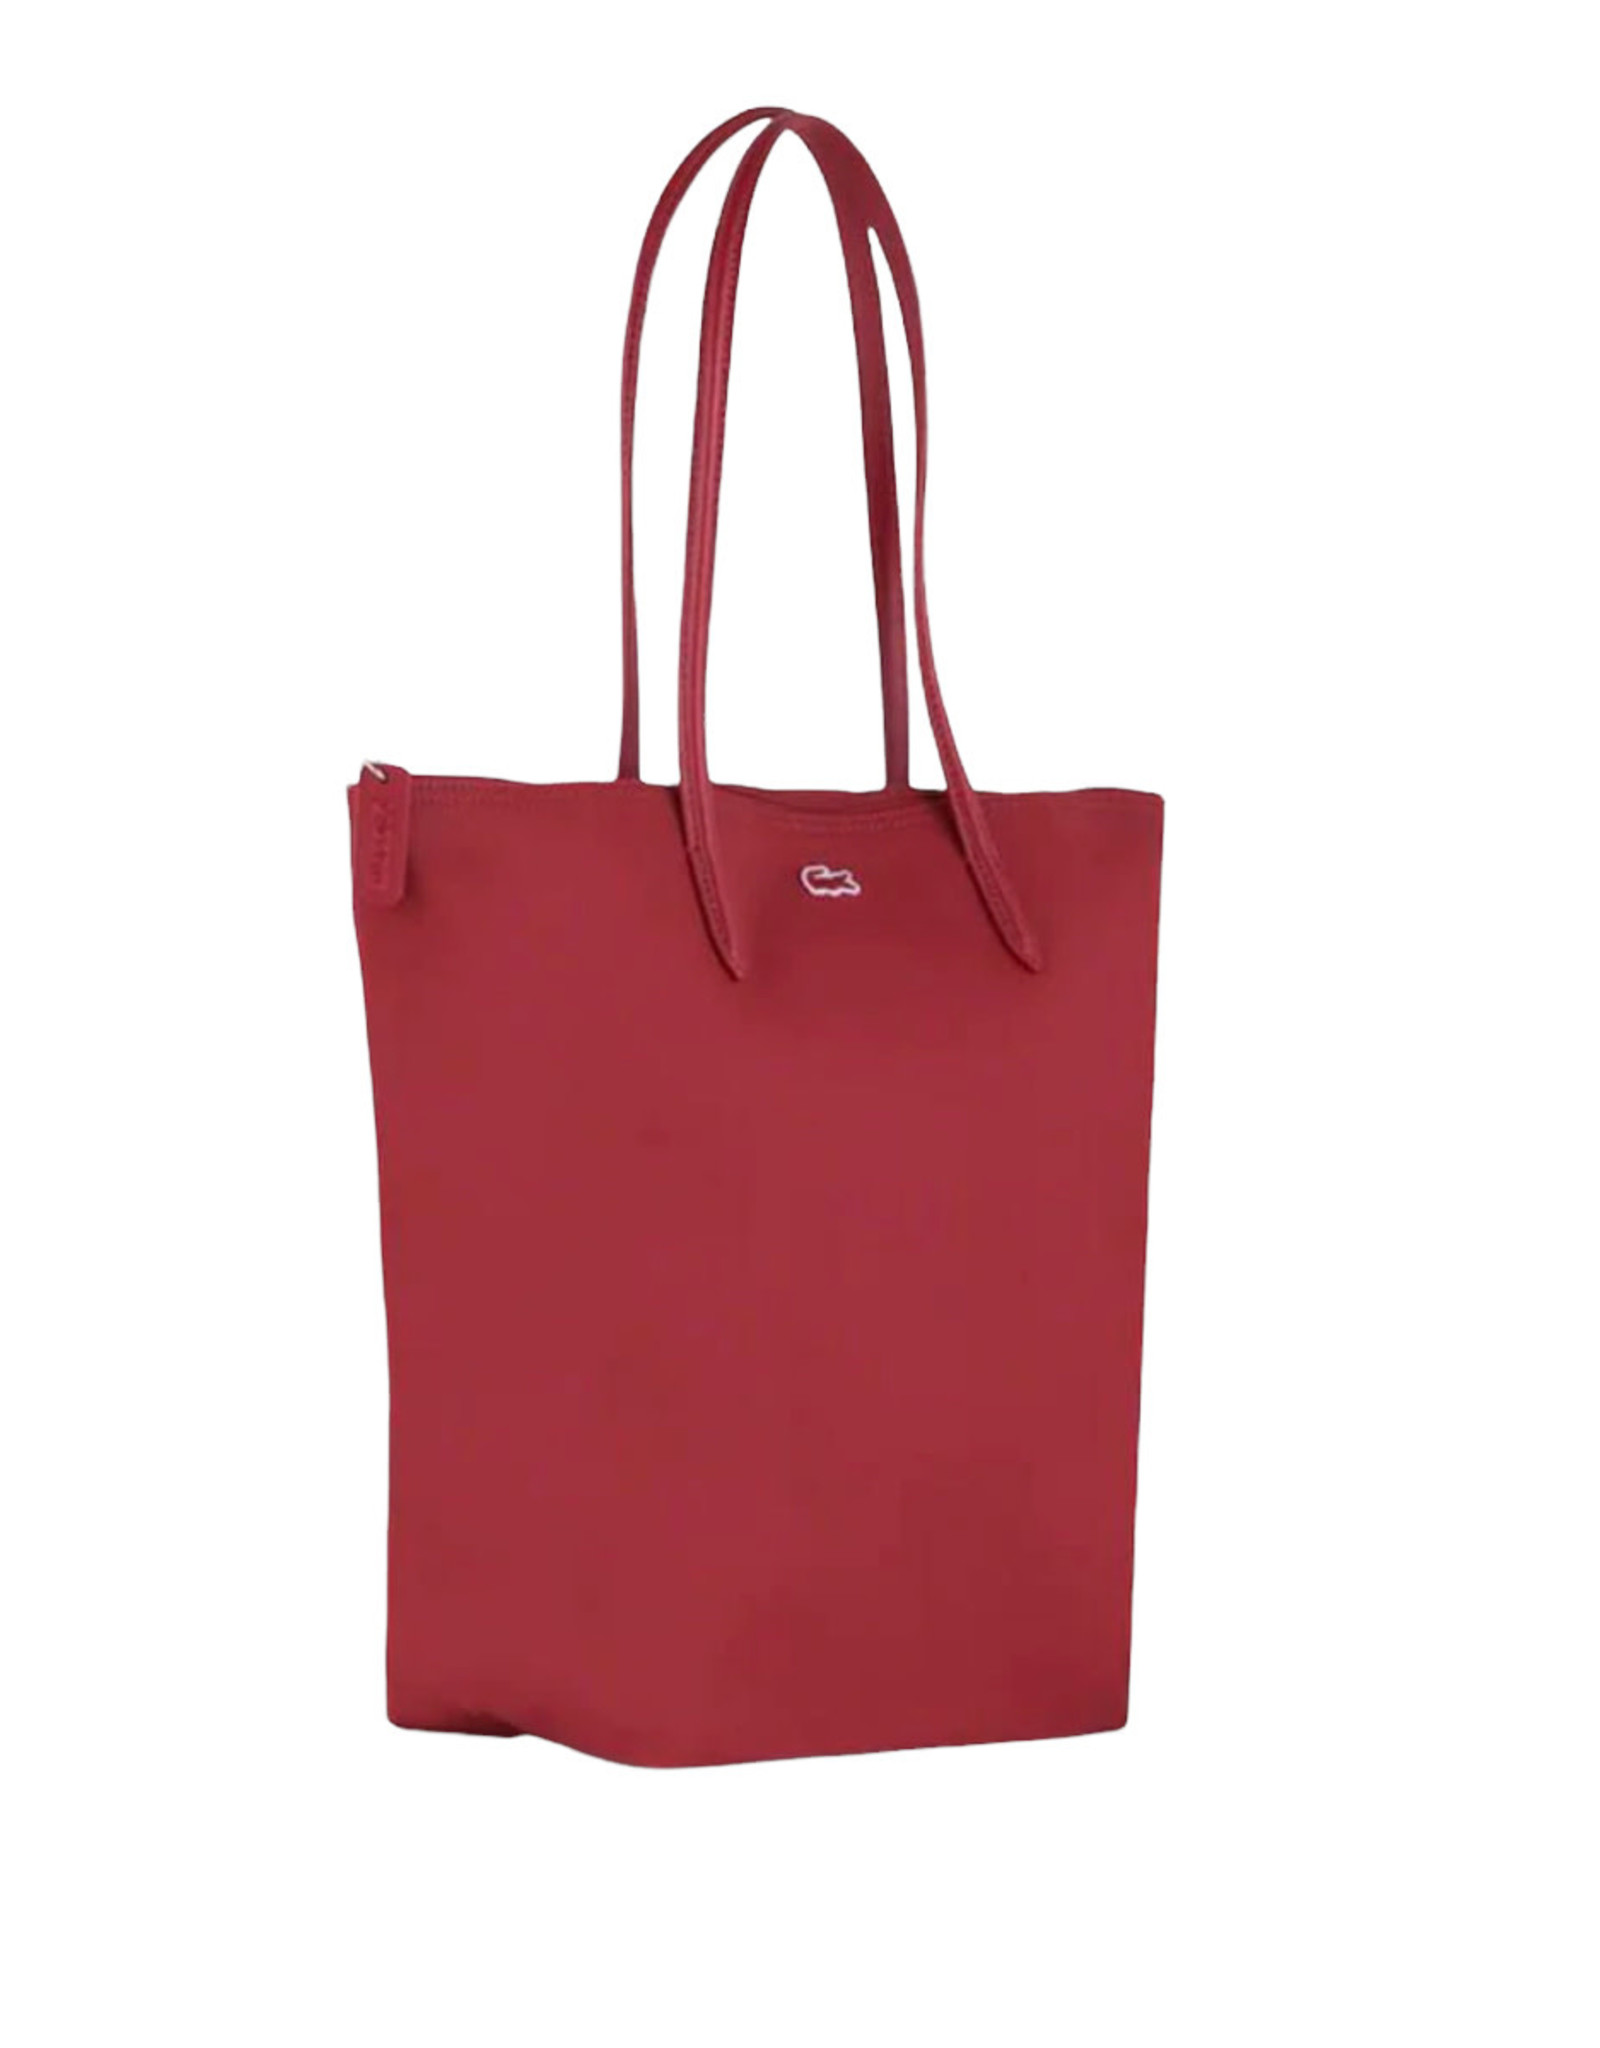 Lacoste Lacoste Vertical Shopping Bag Polyvinyl Chloride